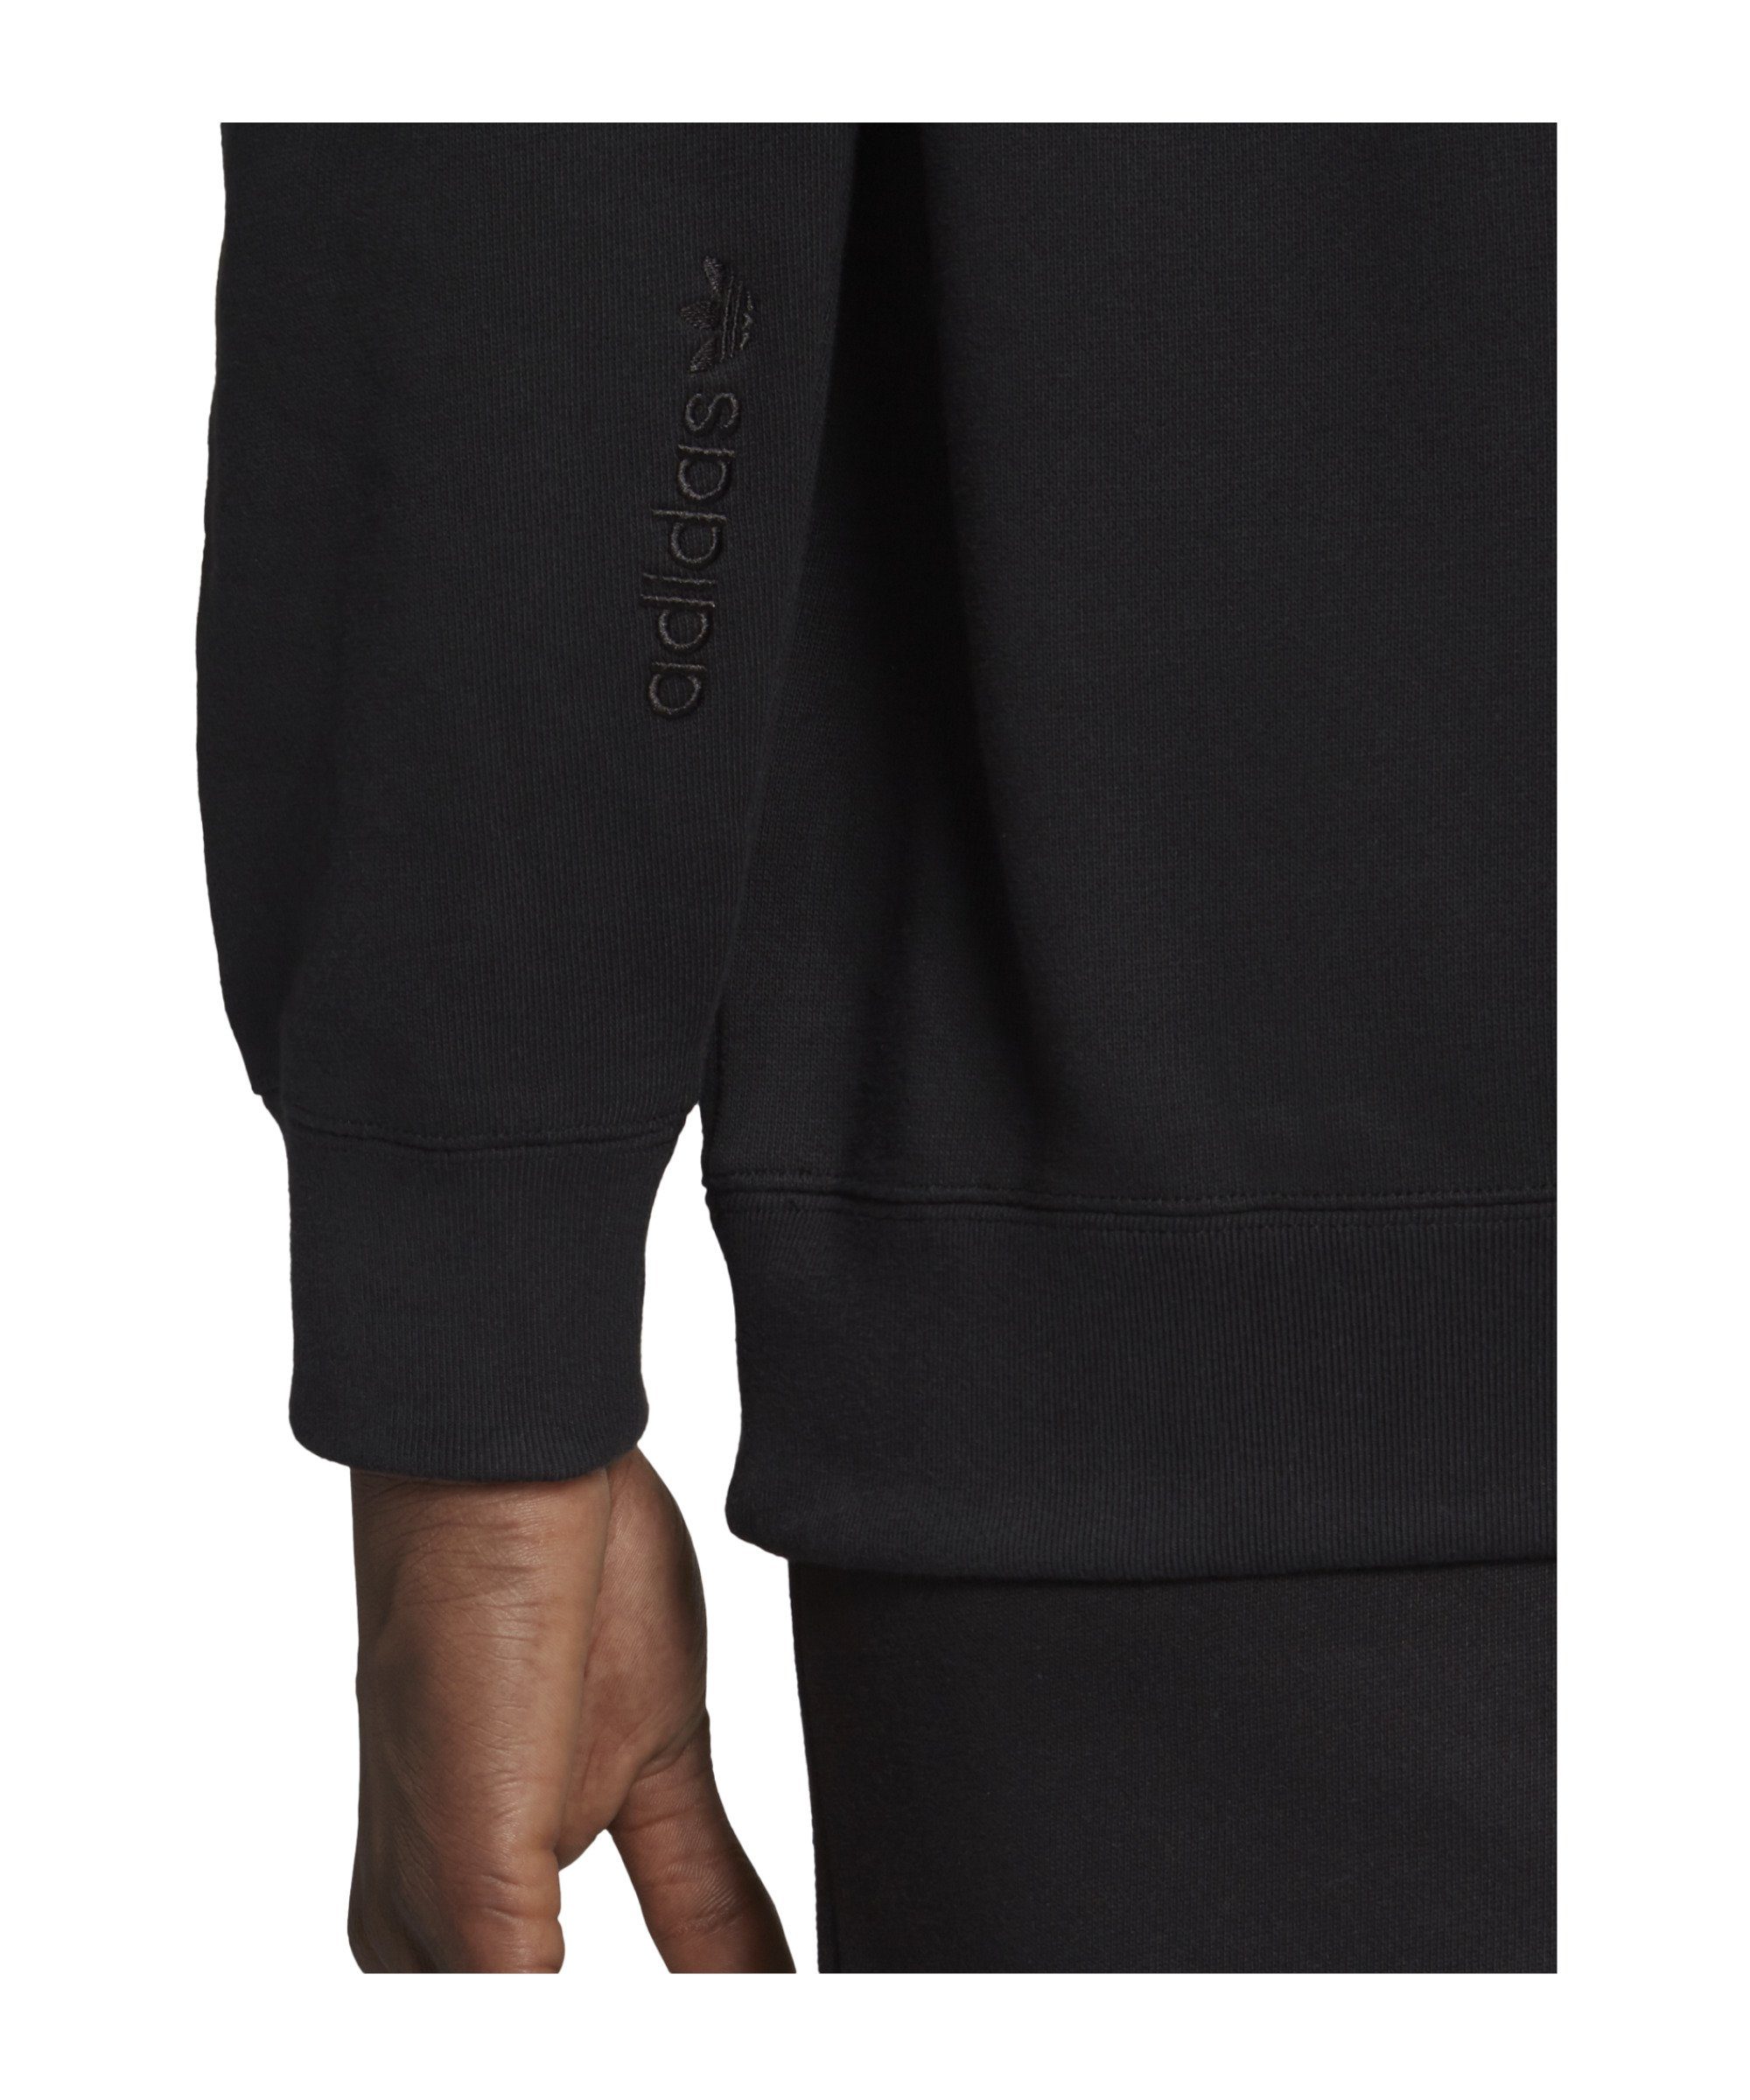 adidas Originals Sweatshirt Trefoil A33 Hoody schwarz